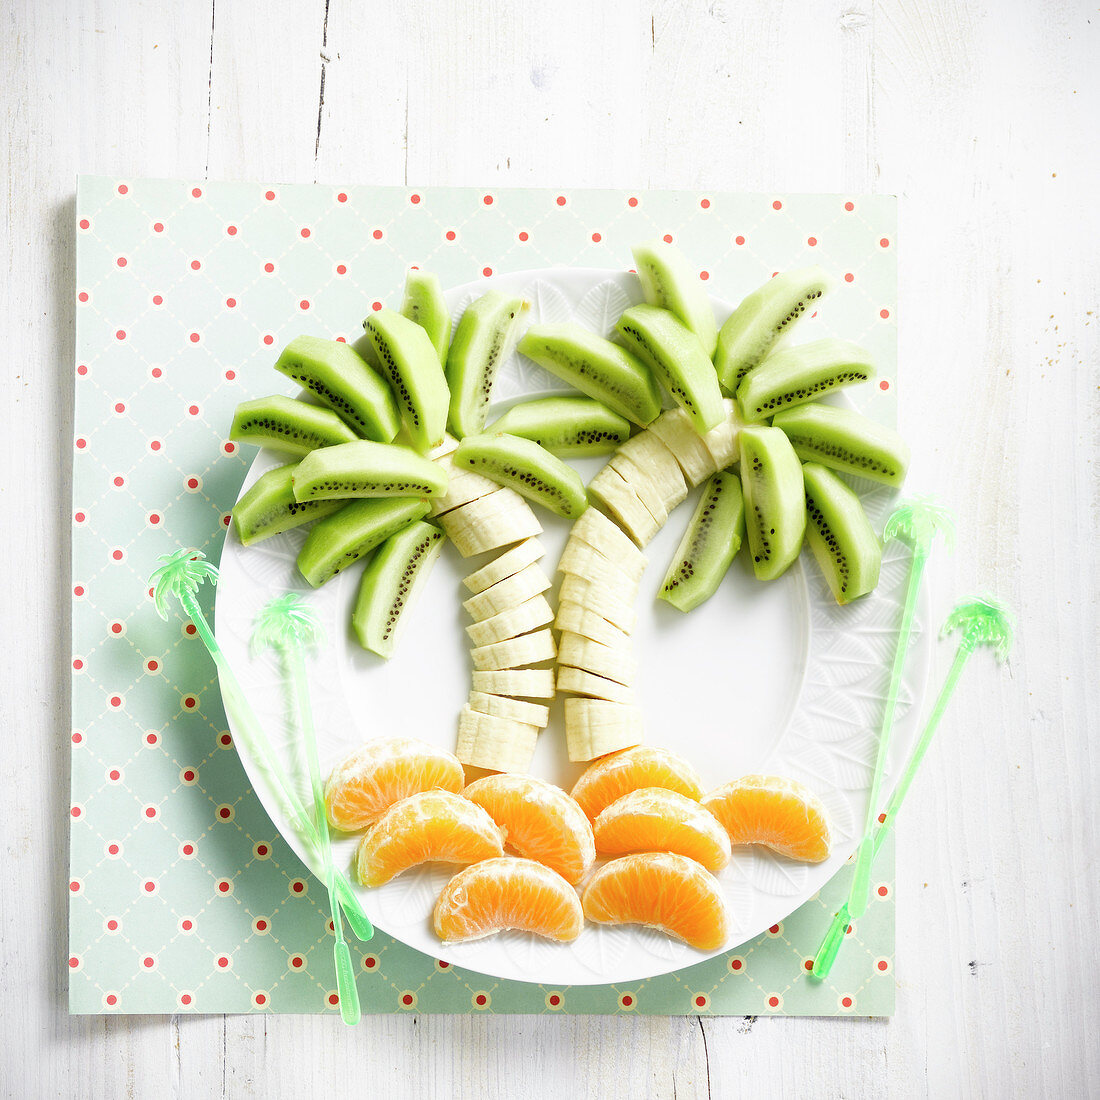 Palm tree-shaped banana, orange and kiwis